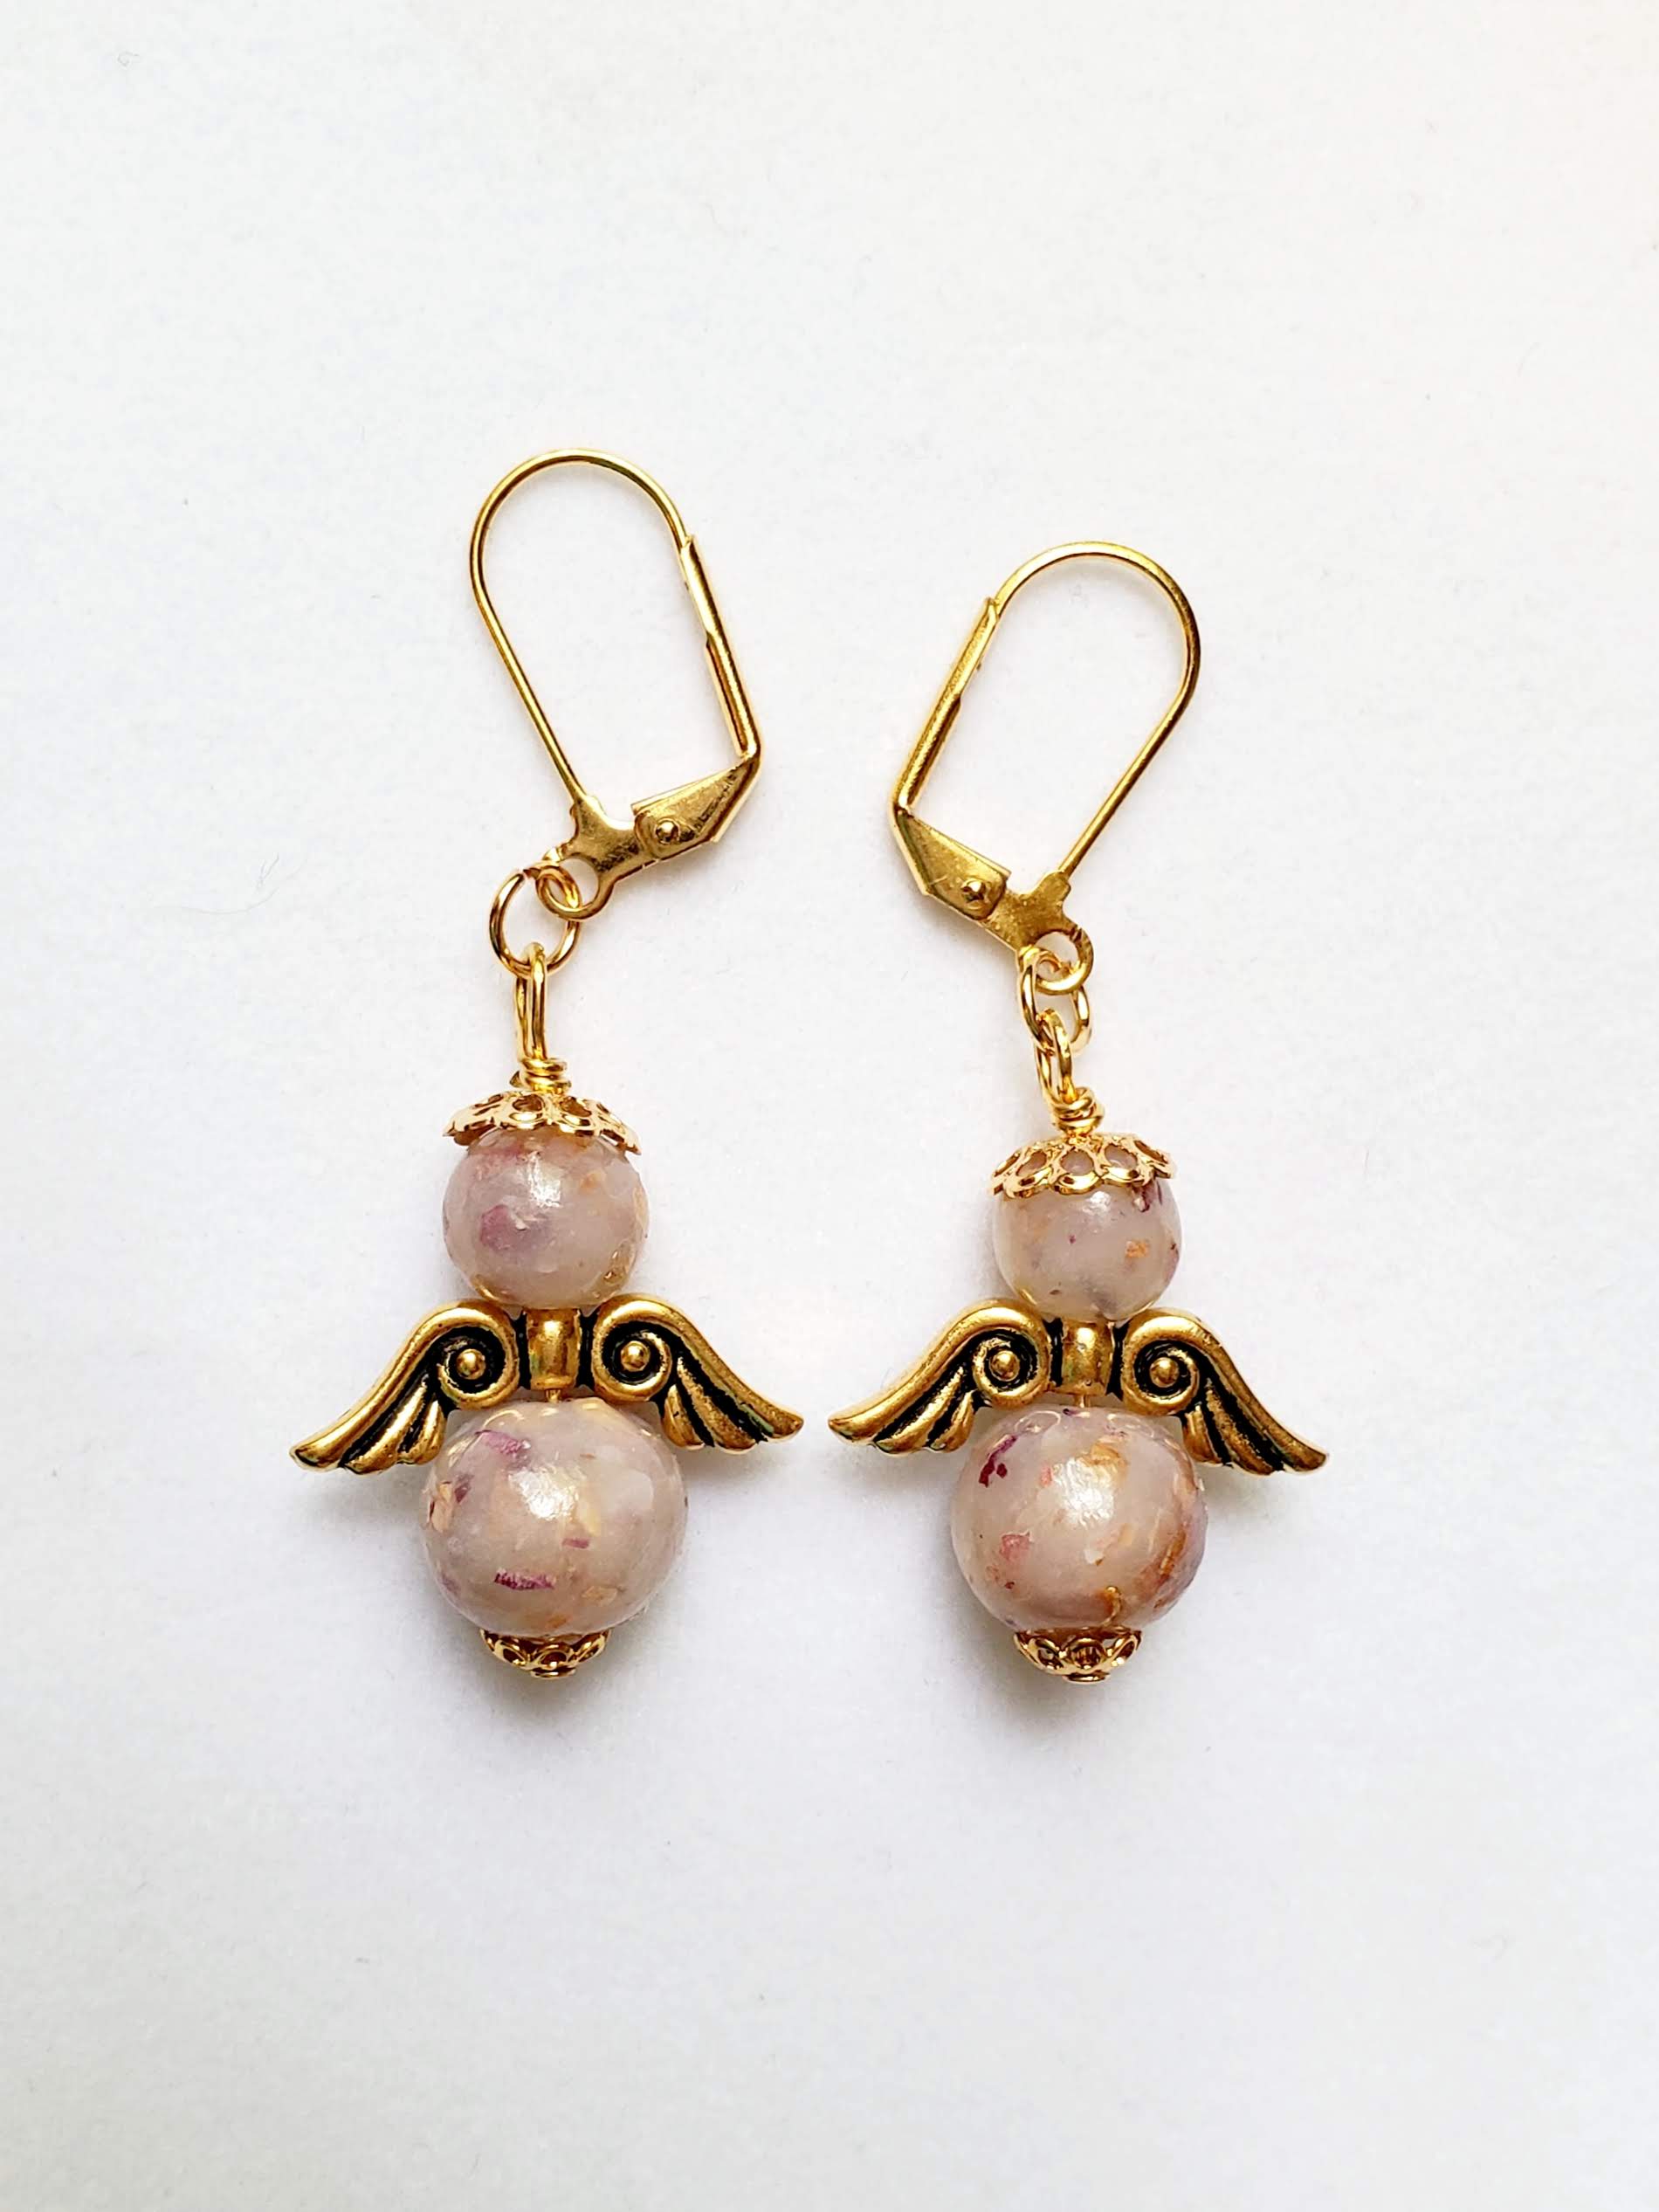 Huggie Black Earrings with Gold Bead, Small Dark silver Hoop Earrings -  Nadin Art Design - Personalized Jewelry